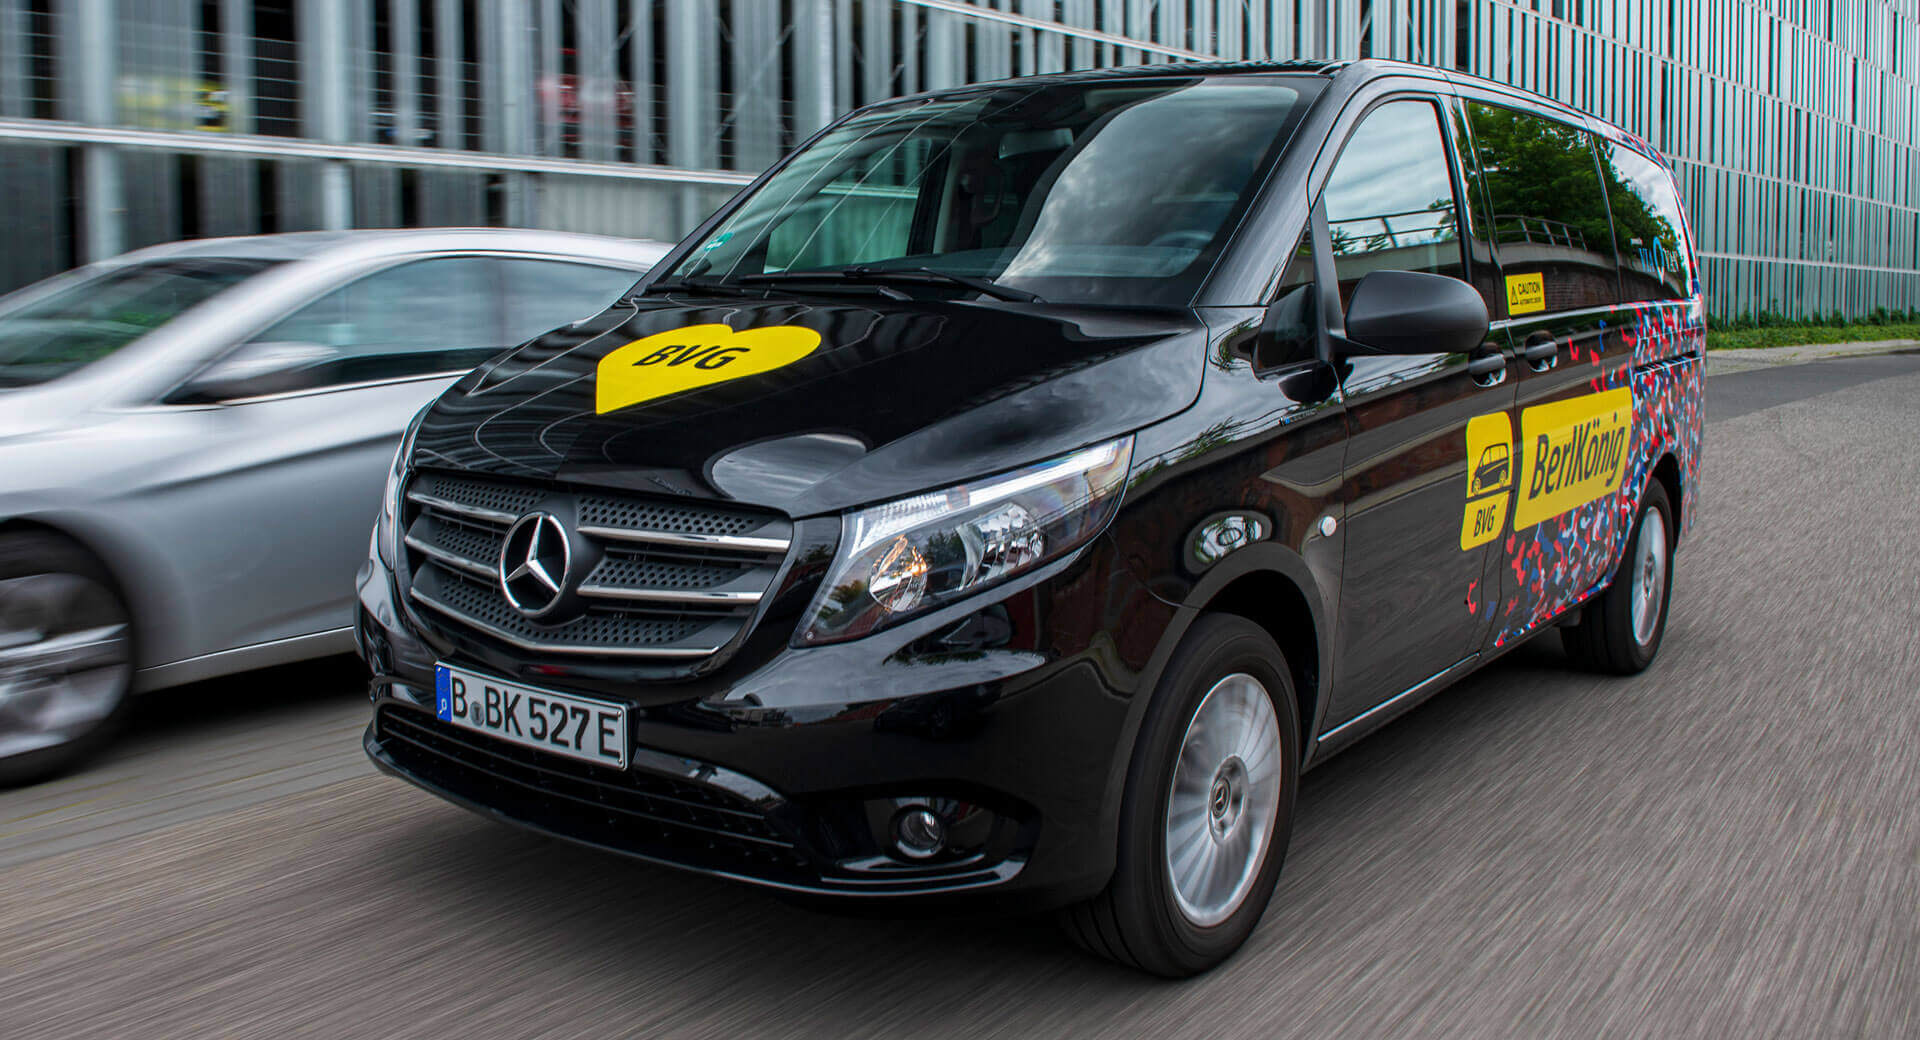 Mercedes-Benz debuts its Vito and eVito vans -- aka the European